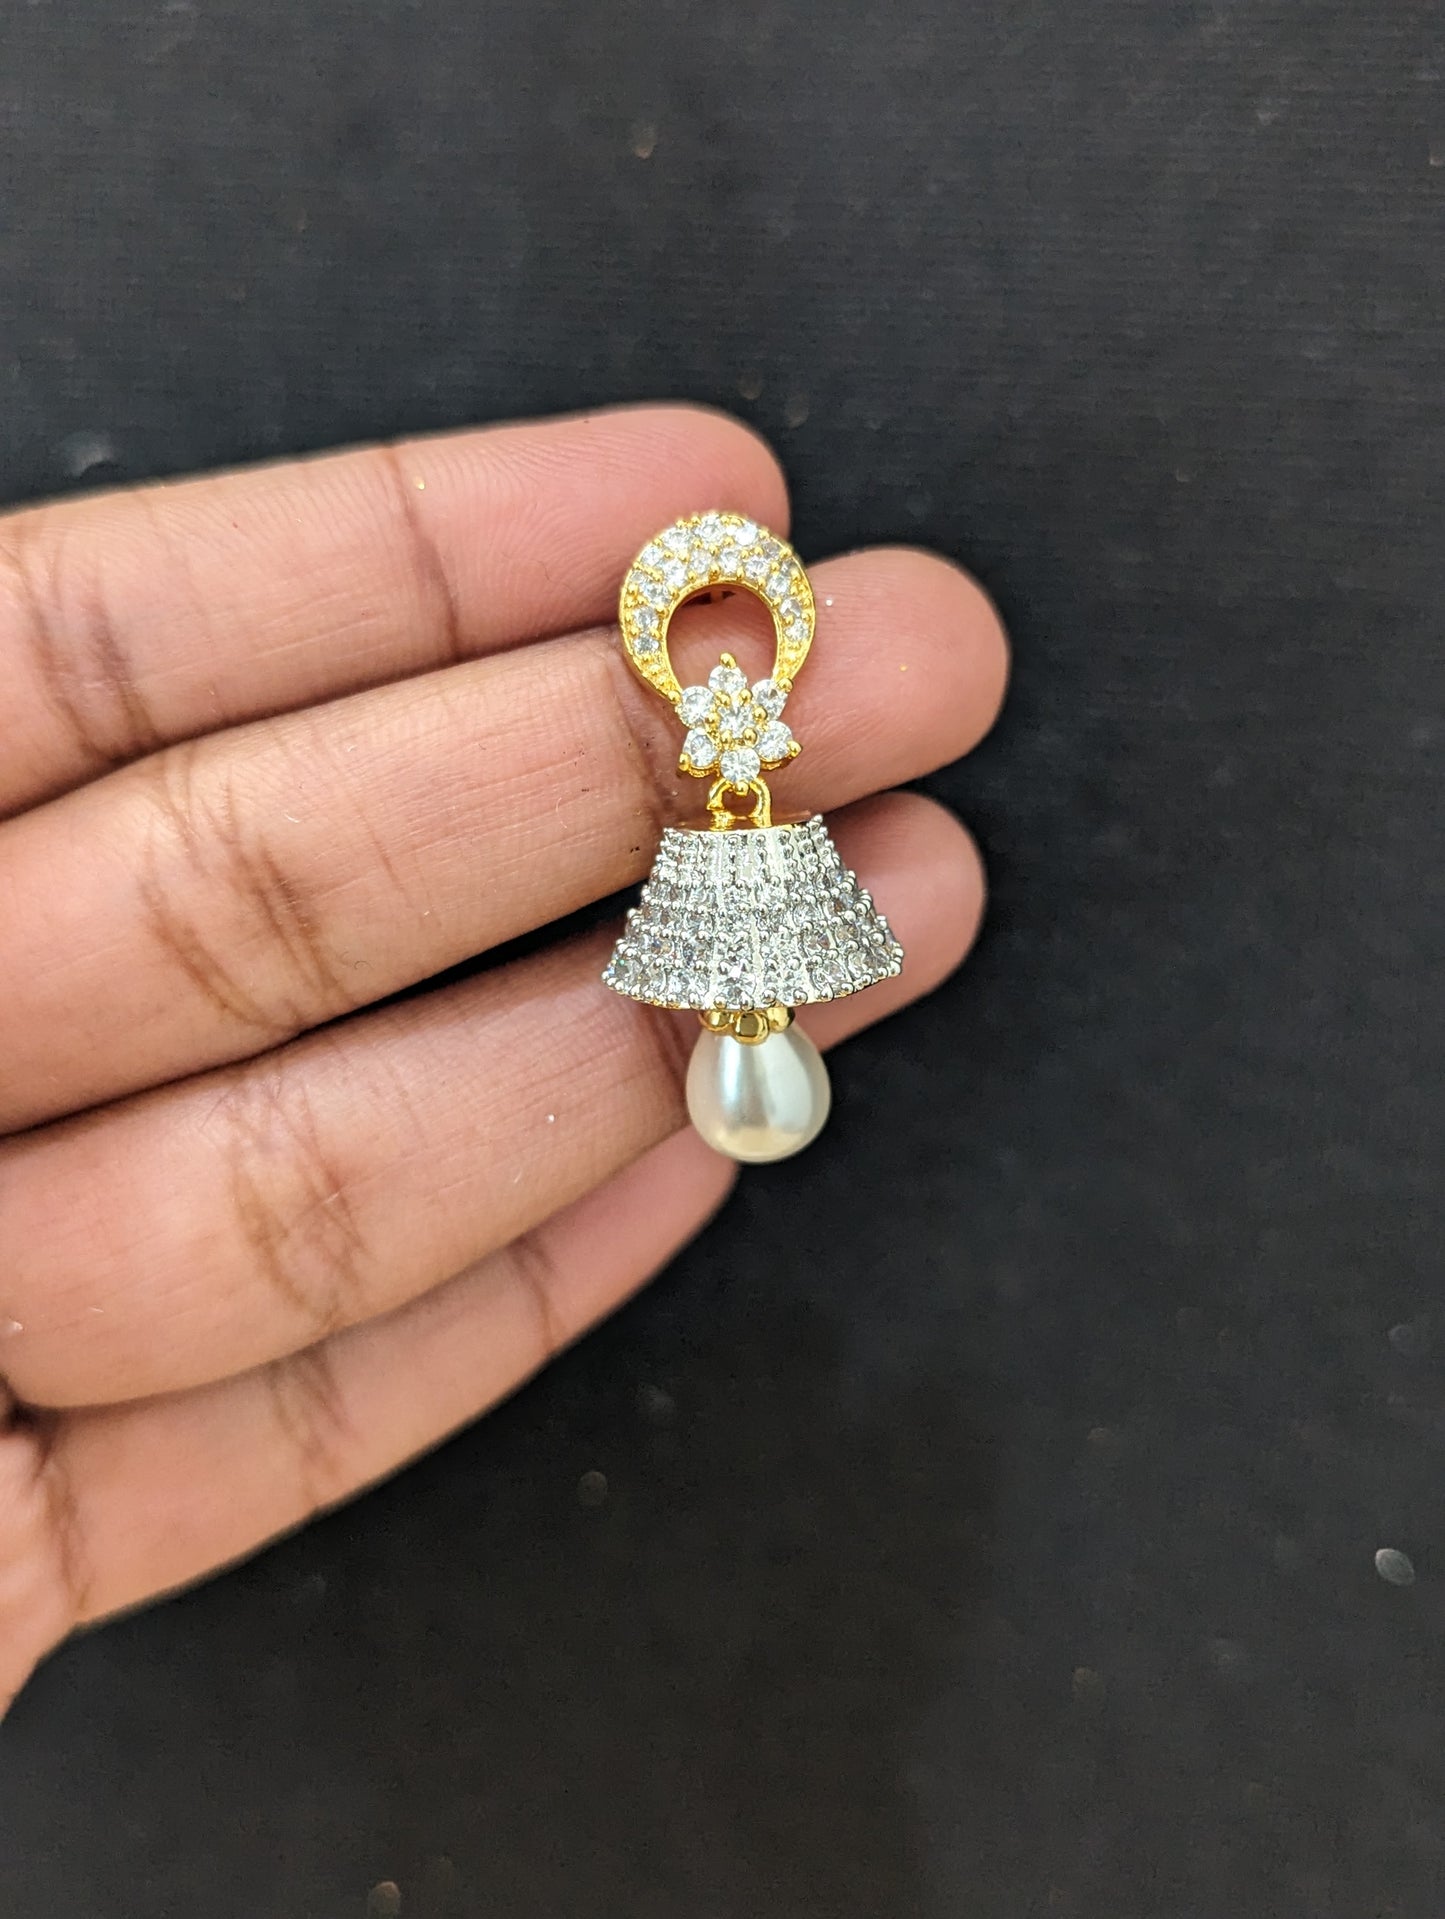 Small CZ Jhumka earrings - Design 17